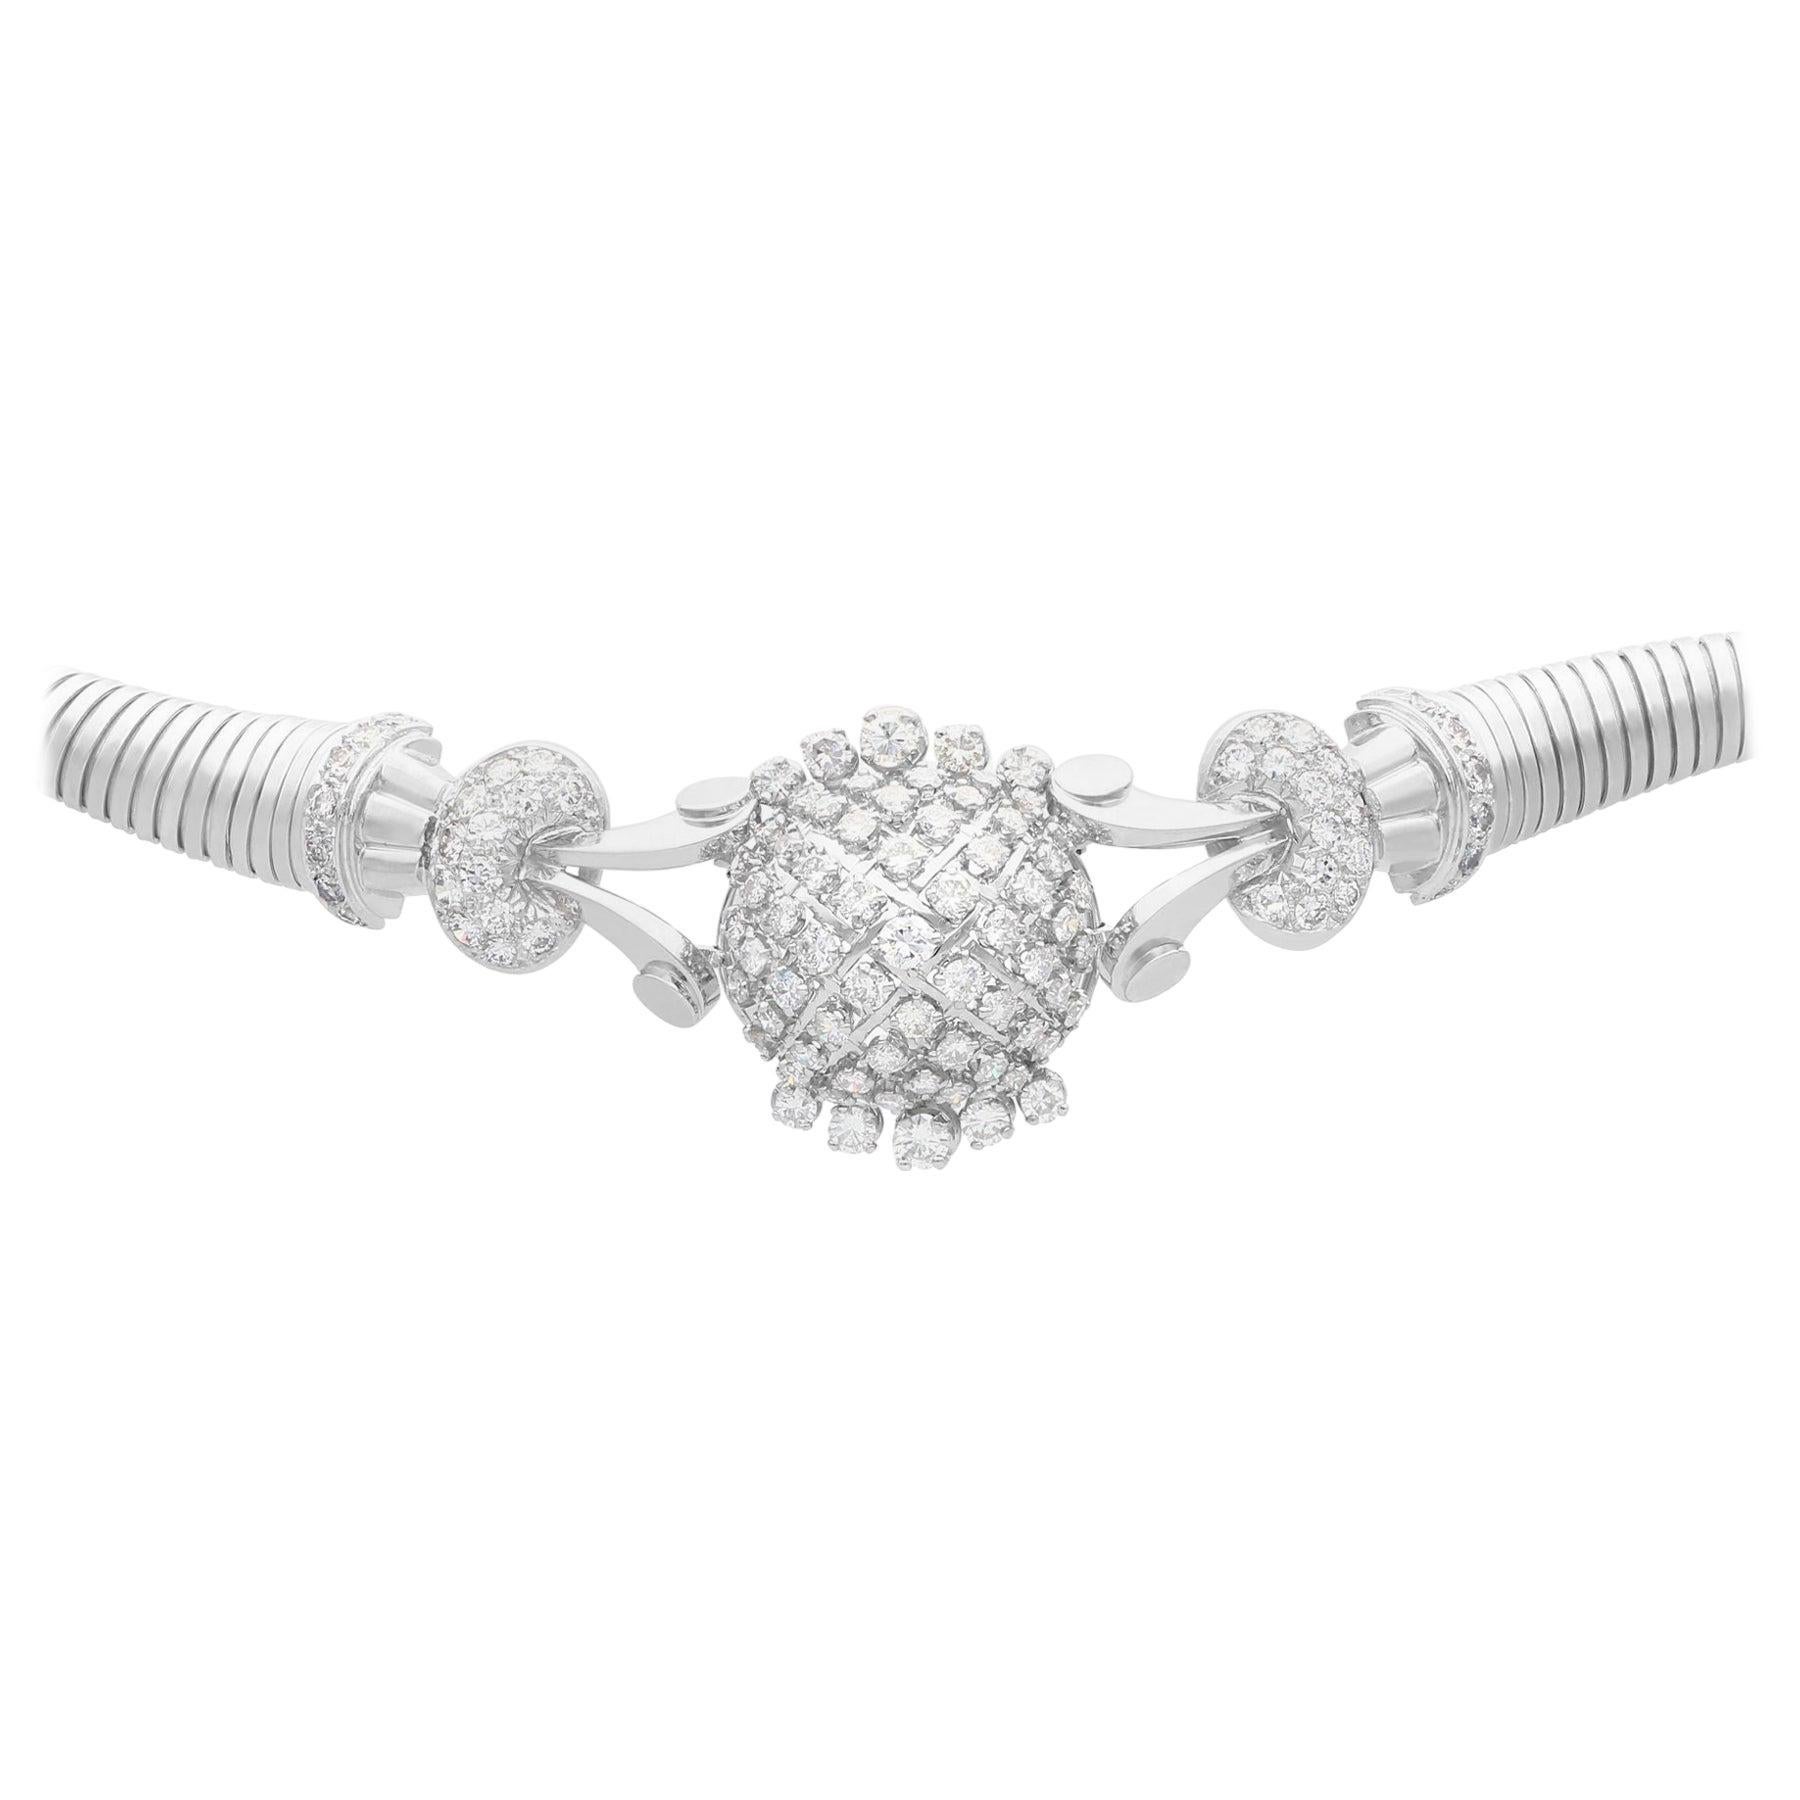 French Art Deco 6.68 Carat Diamond and White Gold Necklace Bracelet